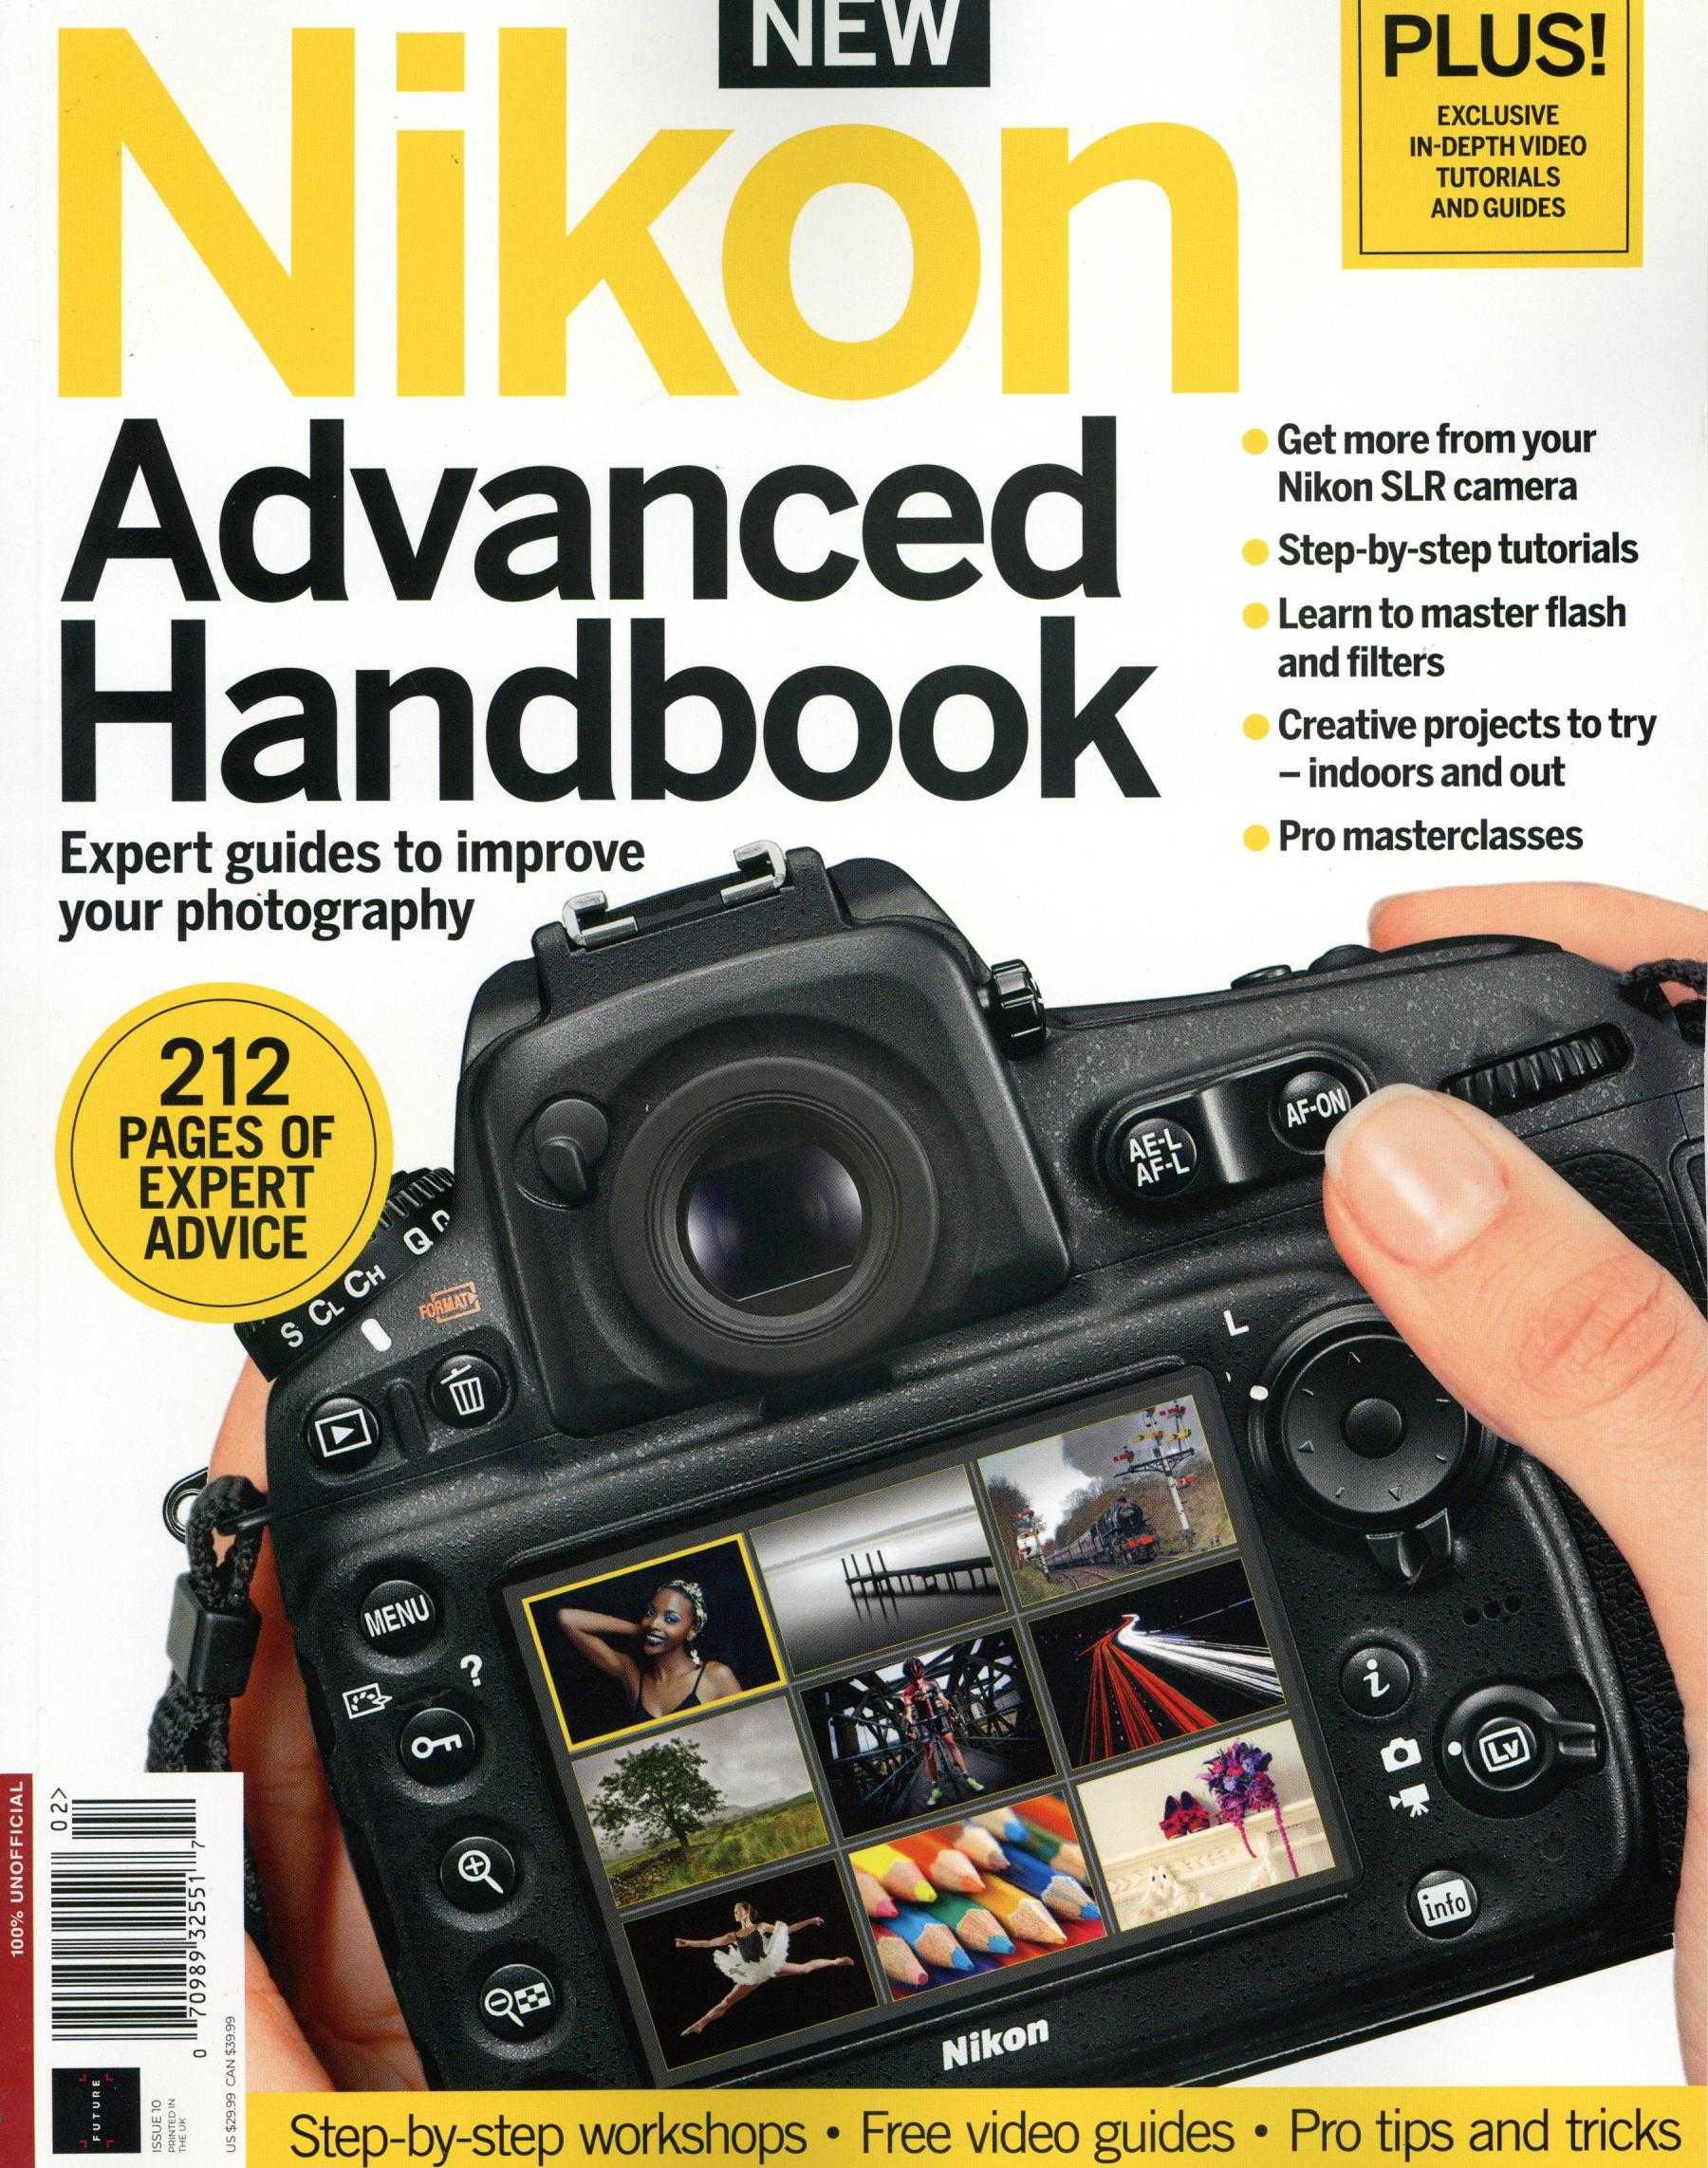 Nikon Advanced Handbook